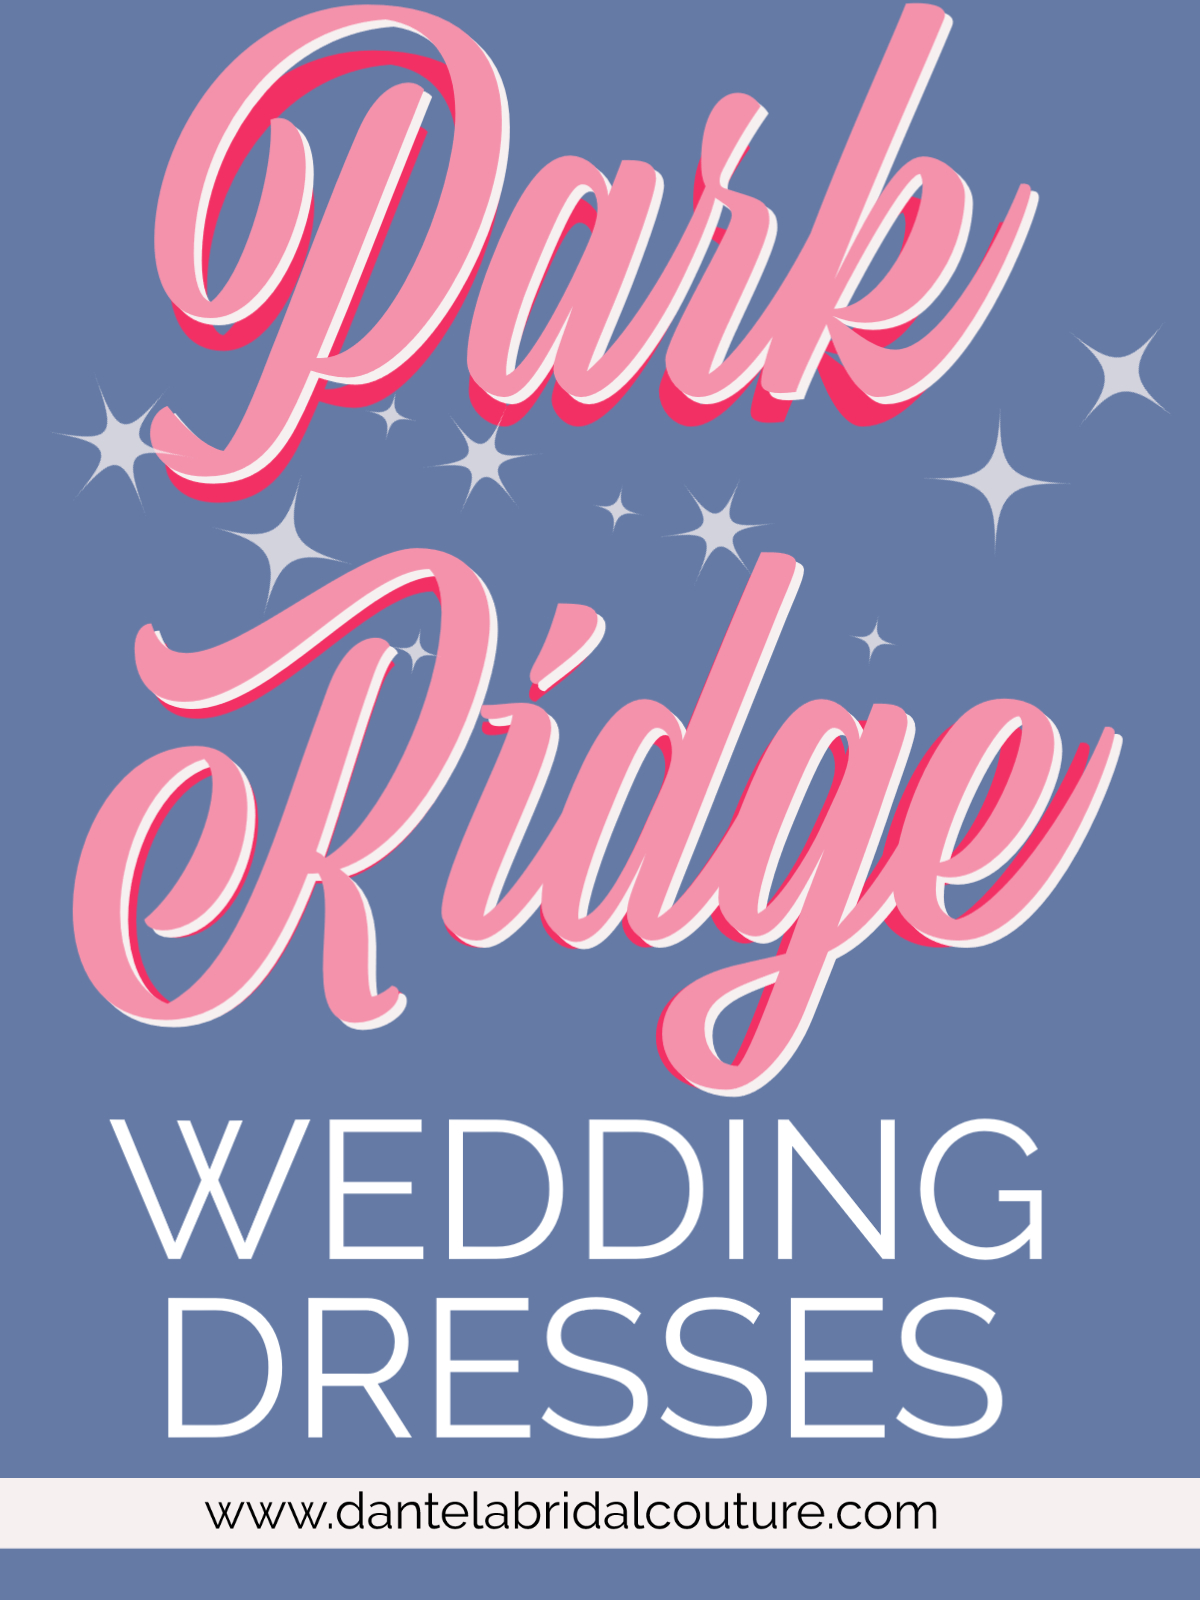 Park Ridge Wedding Dresses